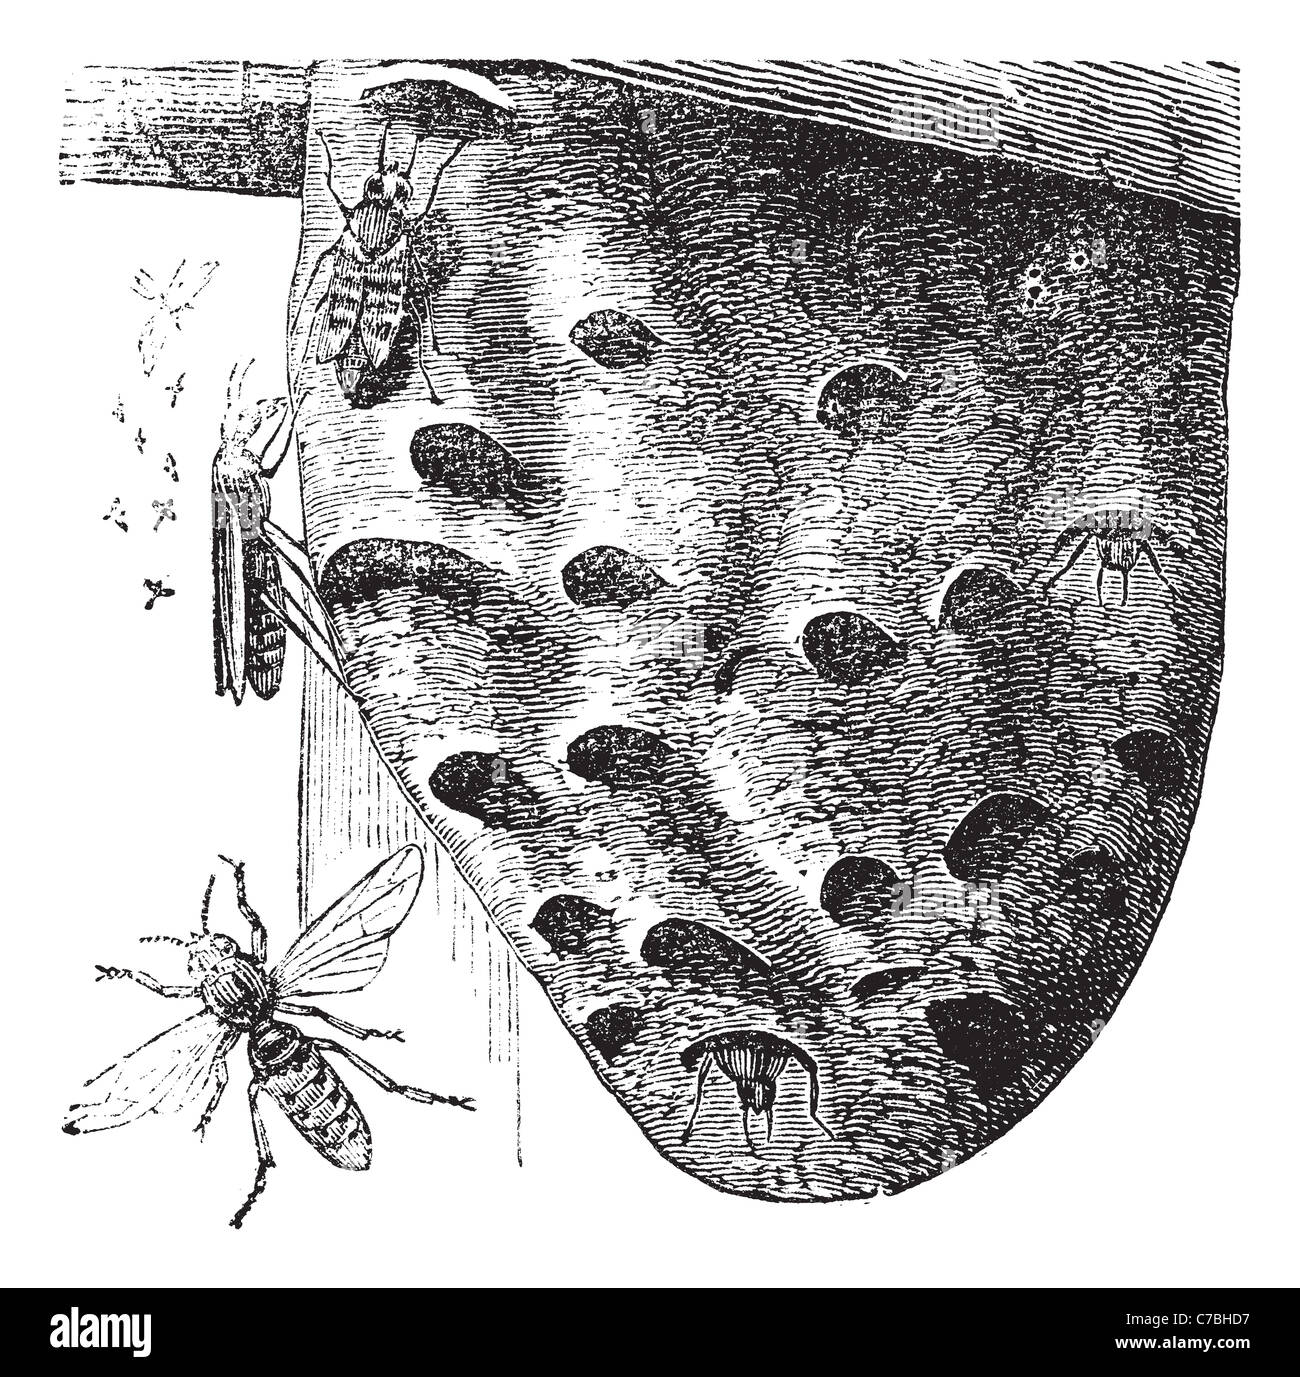 Hornets and Hornet's nest vintage engraving. Old engraved illustration of Hornets hovering on a nest. Stock Photo